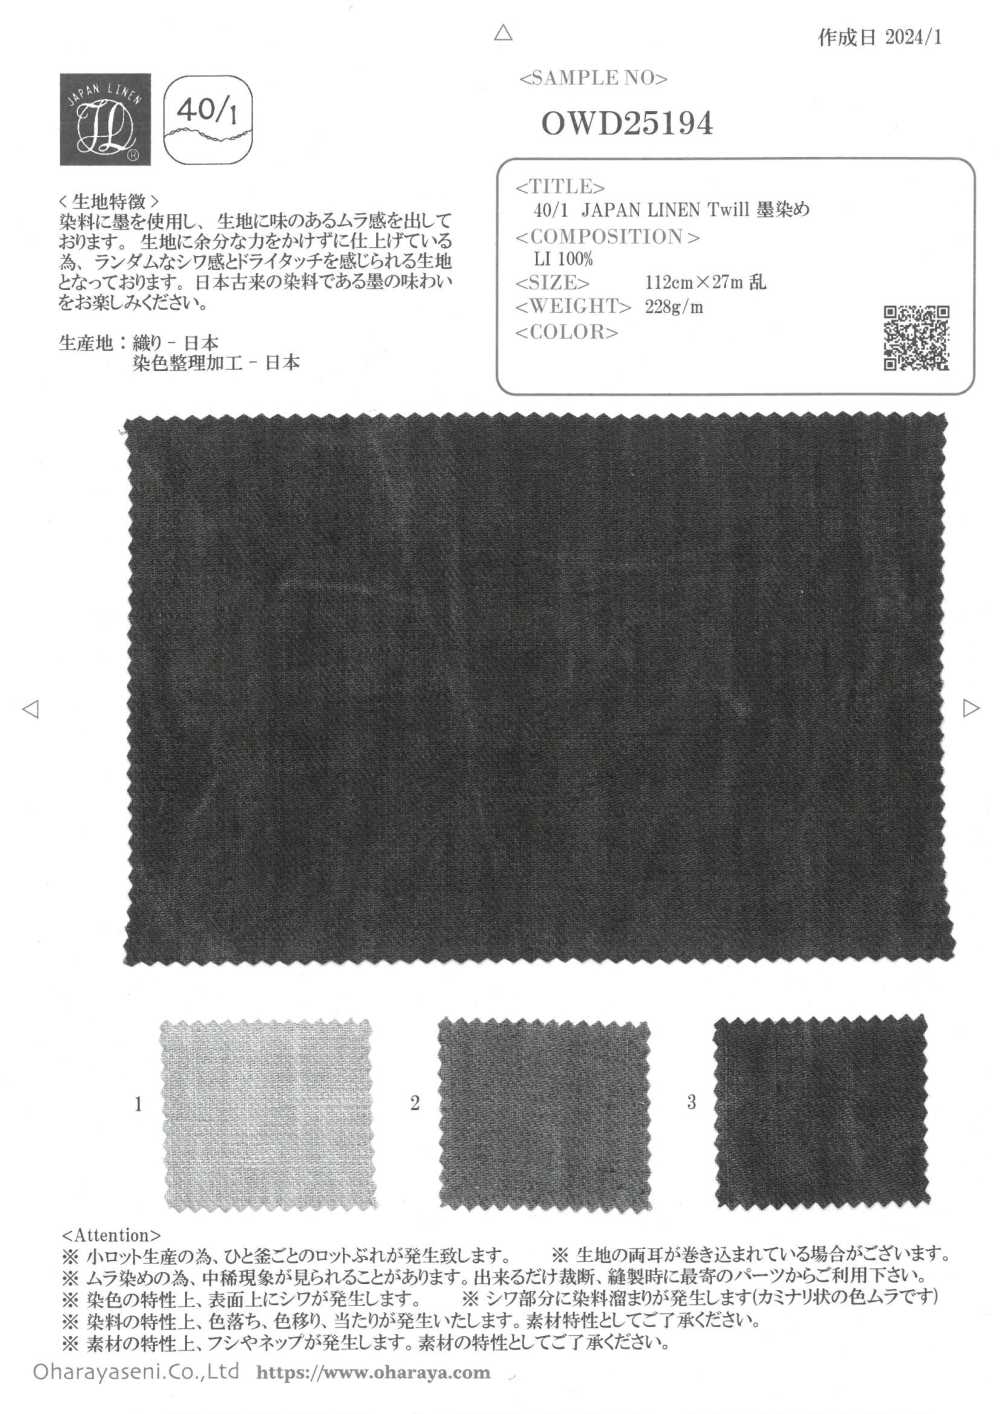 OWD25194 40/1 JAPAN LINEN 斜紋 墨染[面料] 小原屋繊維